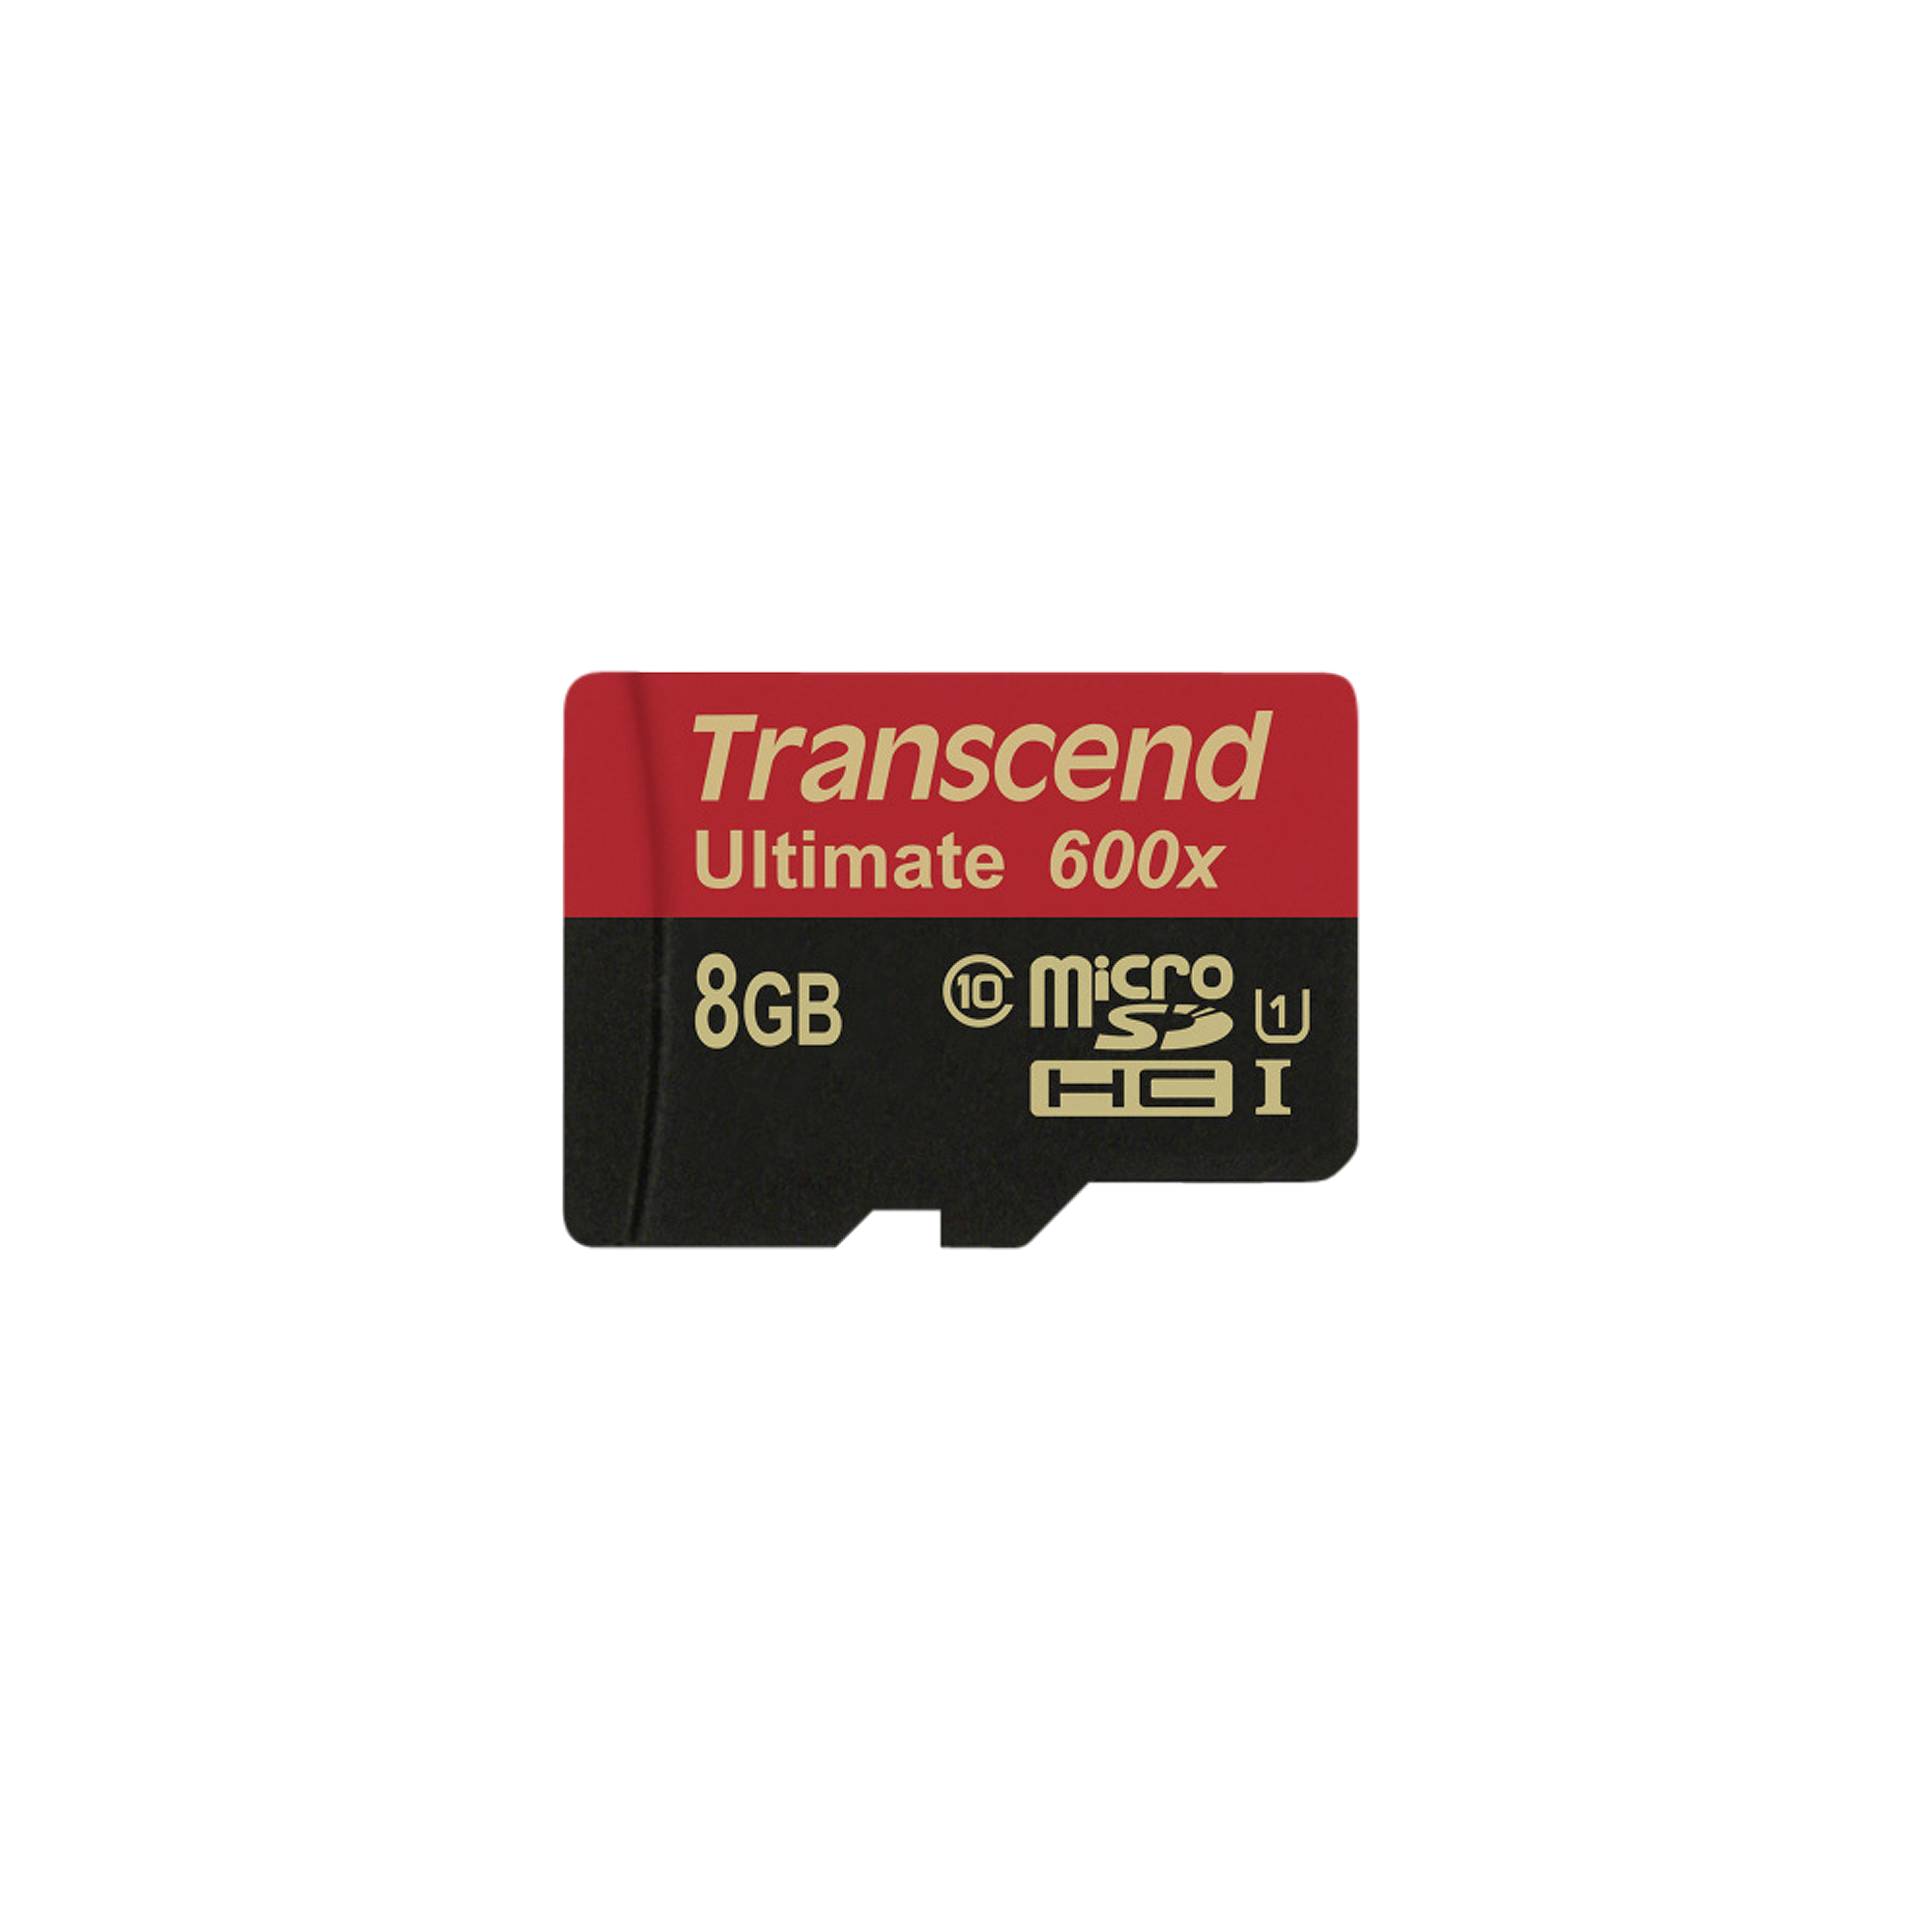 Transcend microSDHC 8GB Class 10 UHS-I MLC 600x + Adattat.SD